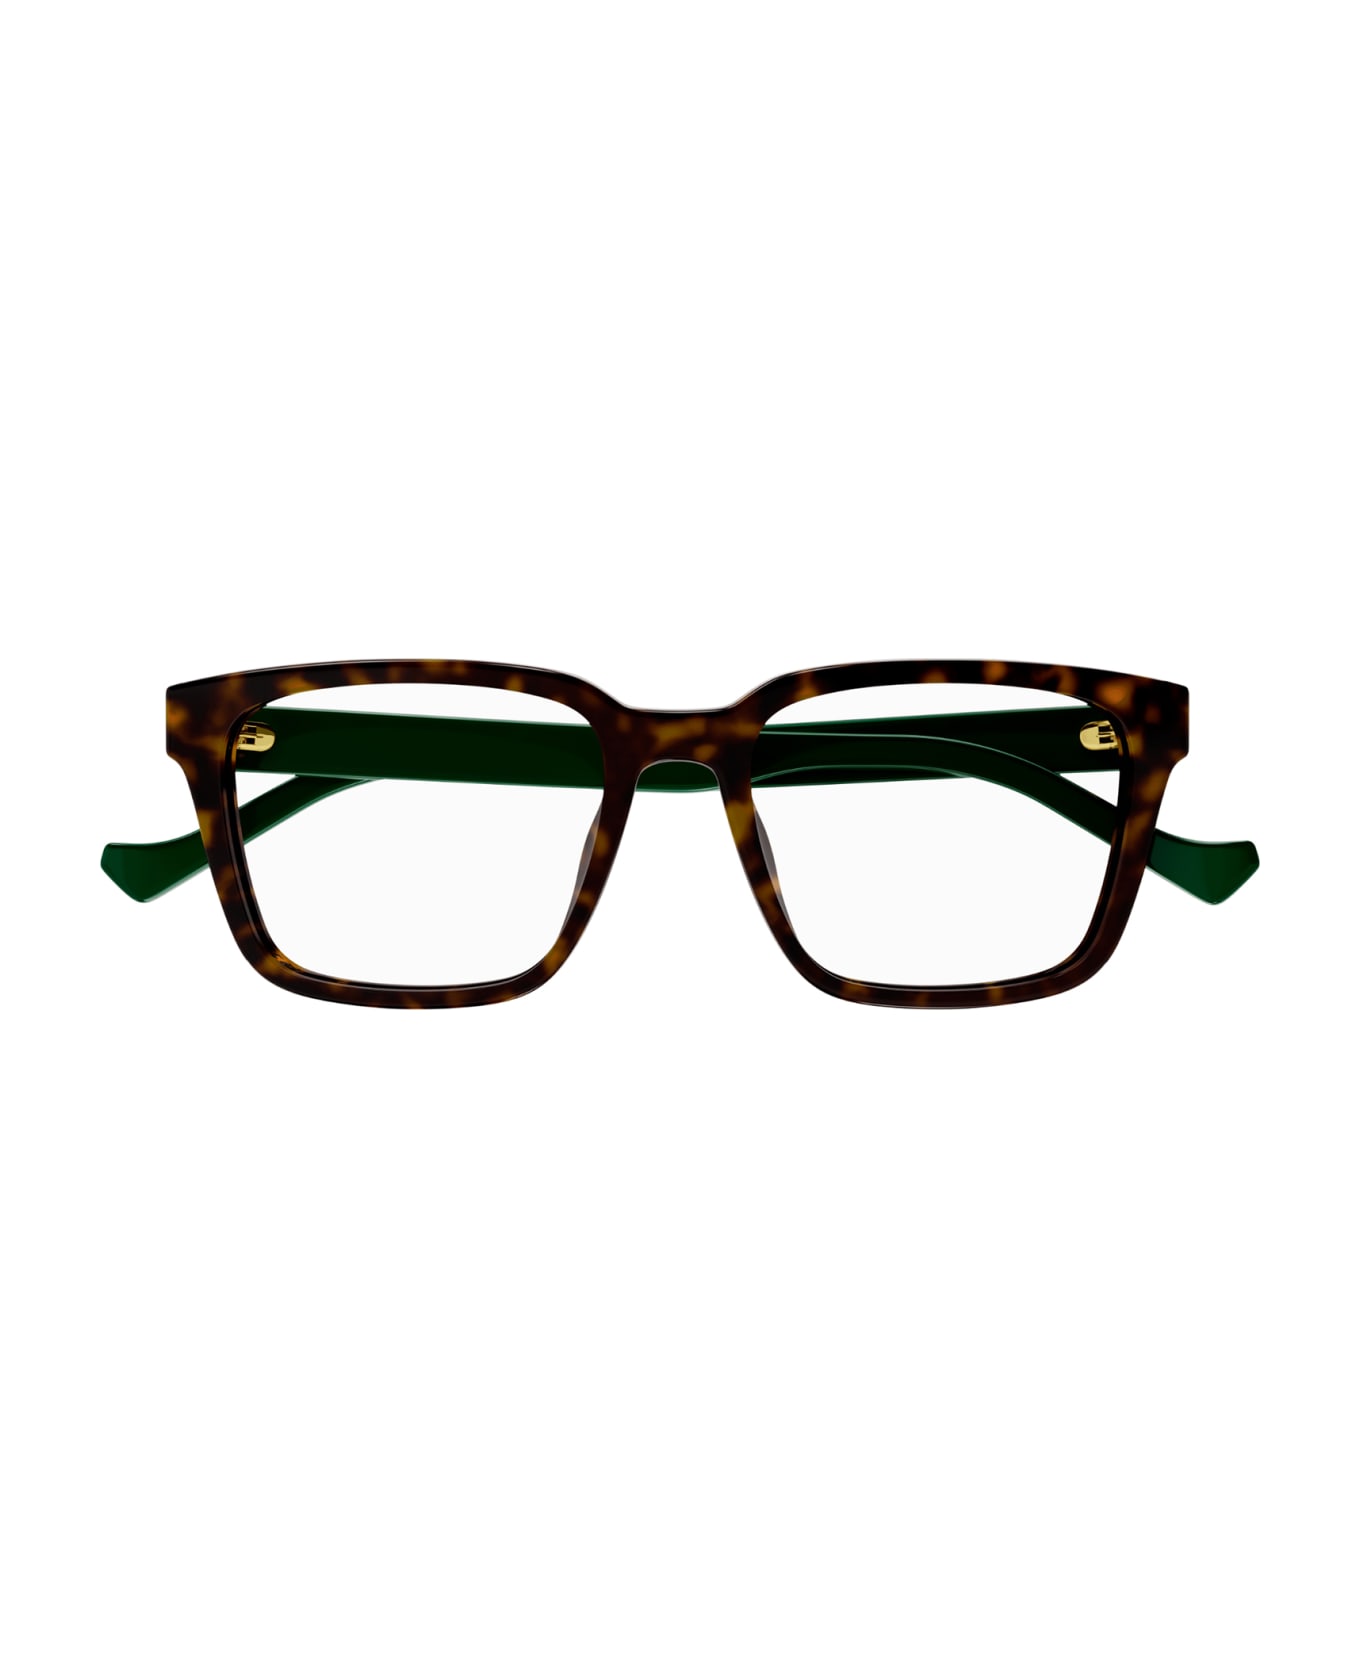 Gucci Eyewear 1fbg4li0a Glasses - 002 havana havana transpa